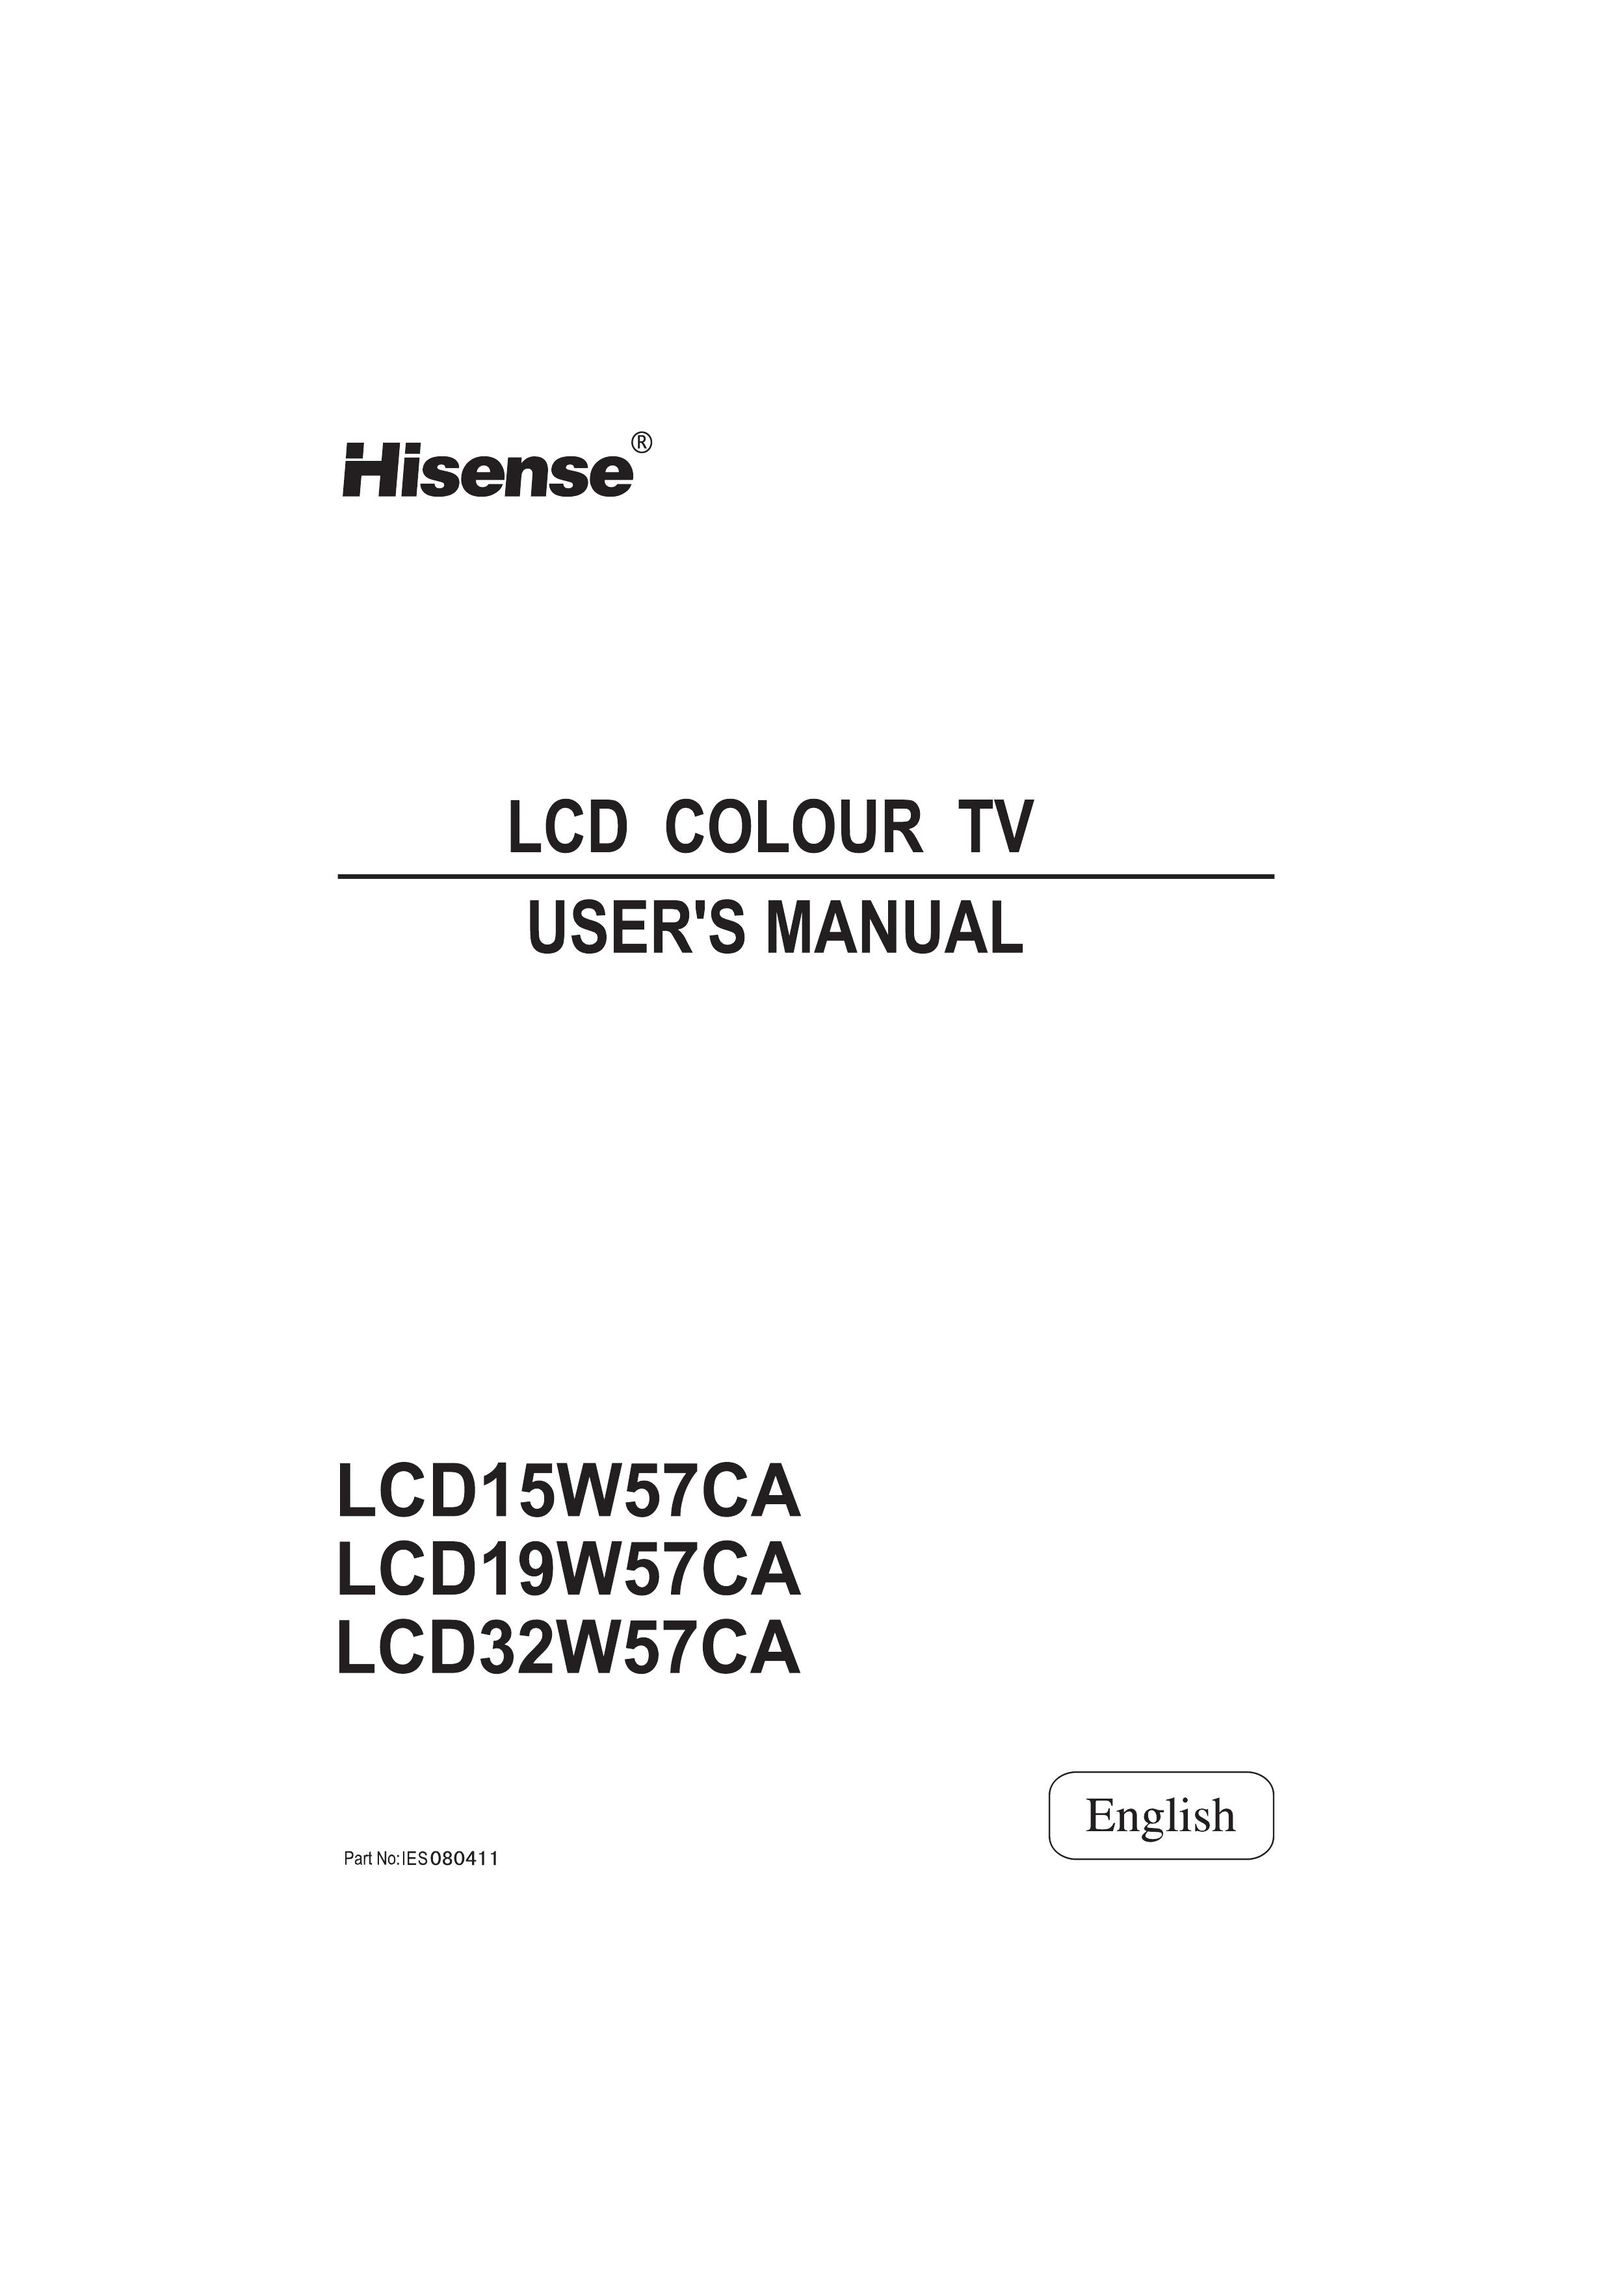 Hisense LCD15W57CA Flat Panel Television User Manual